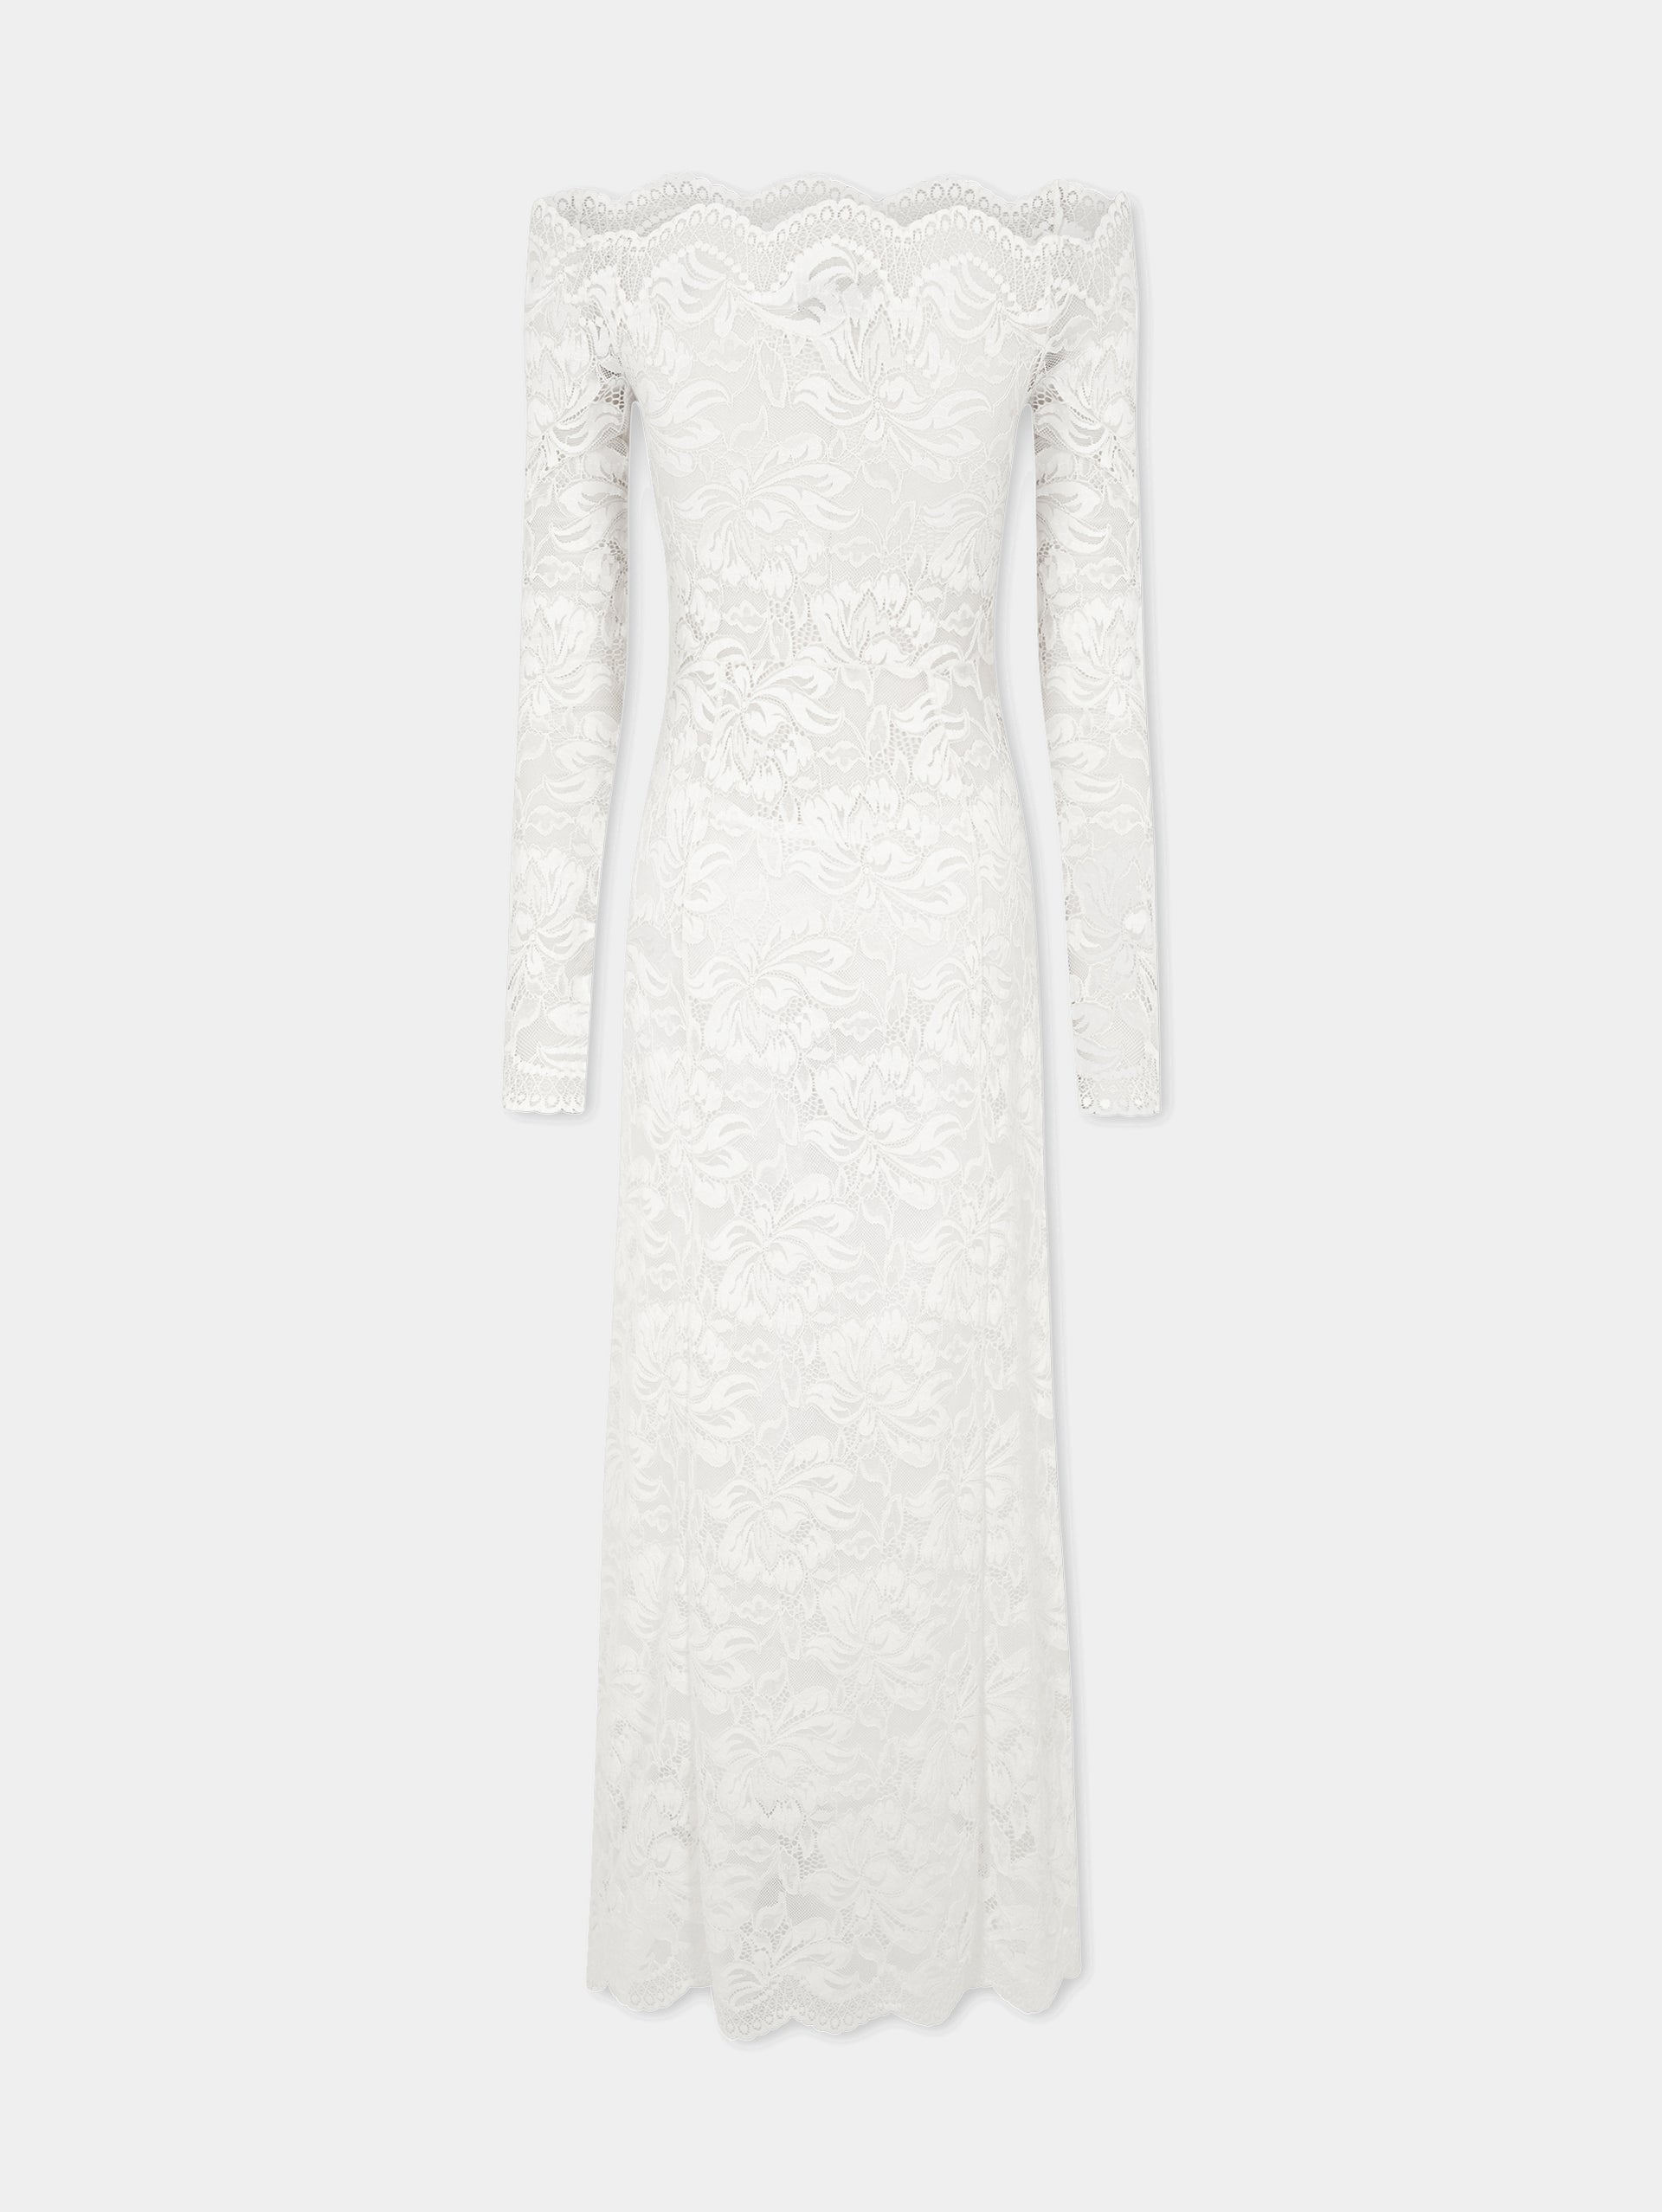 long Ivory lace dress with bardot collar